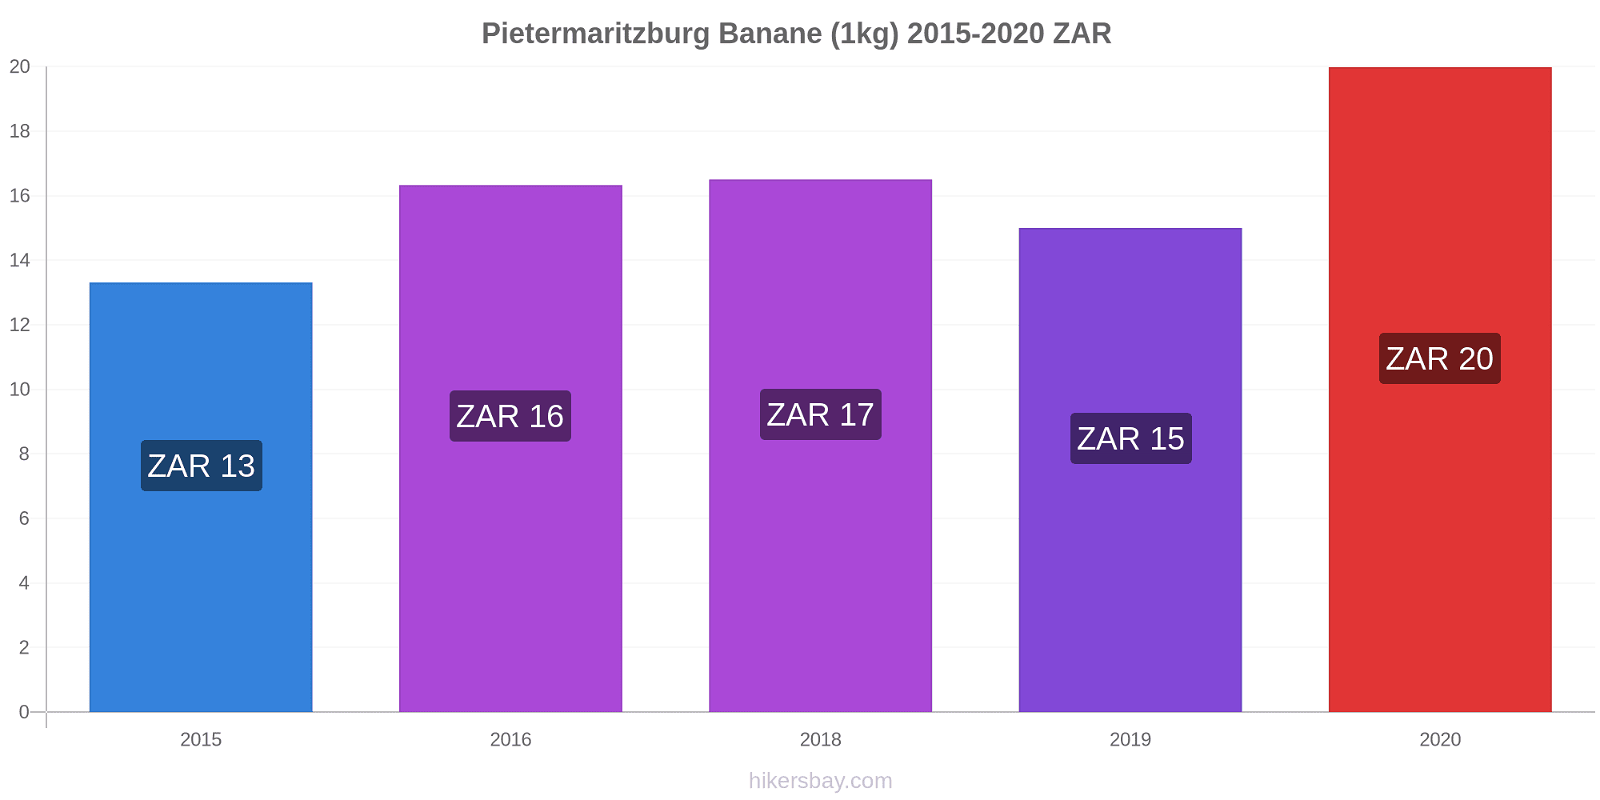 Pietermaritzburg variazioni di prezzo Banana (1kg) hikersbay.com